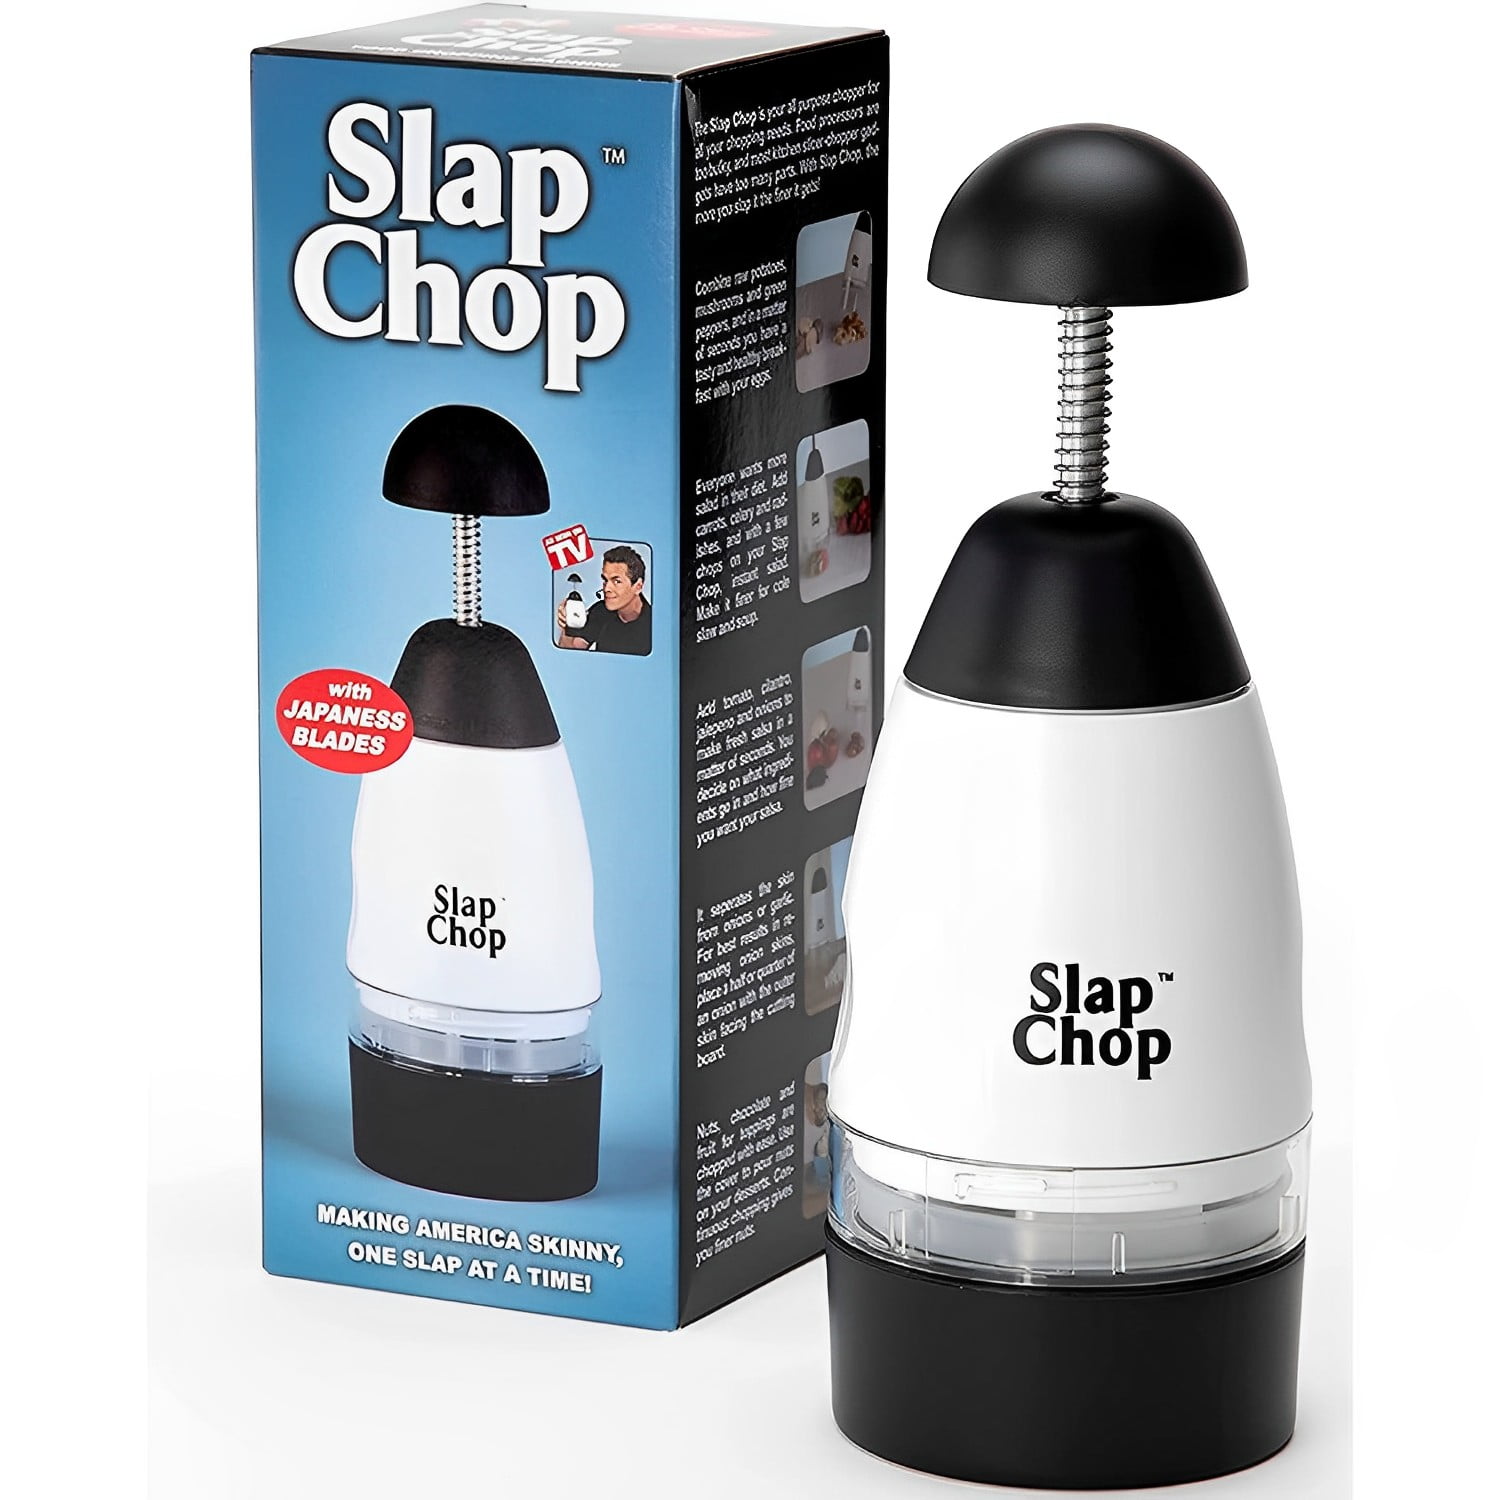 Slap Chop Multi-Purpose Food Chopper w/Graty Cheese Grater 